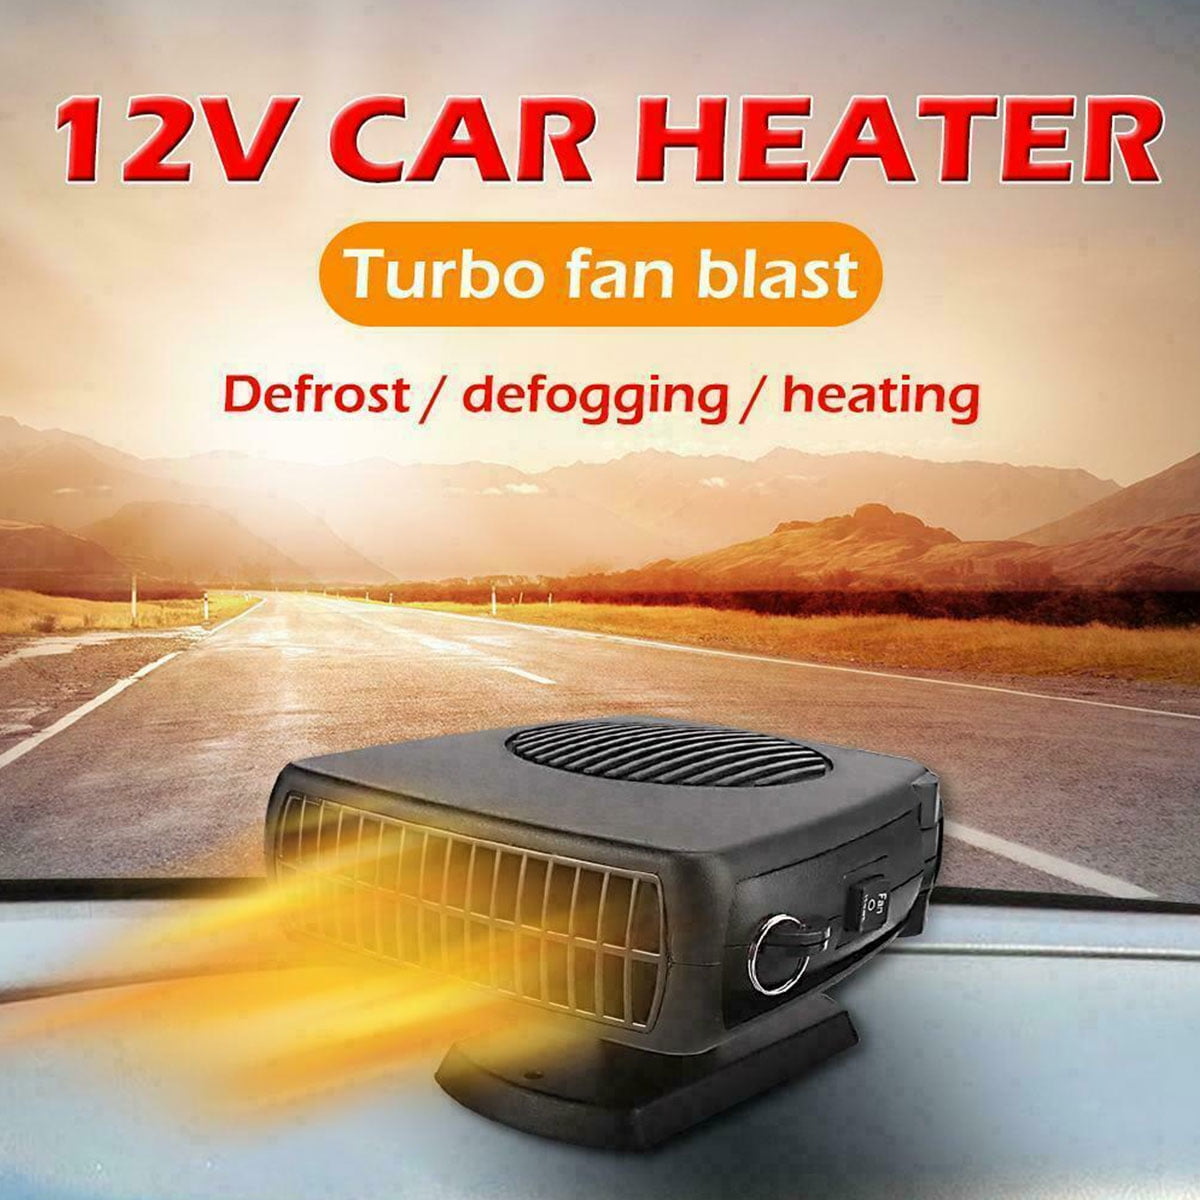 2in1 12V 200W Portable Car Heating Cooling Fan Heater Defroster Demister Upgrade 